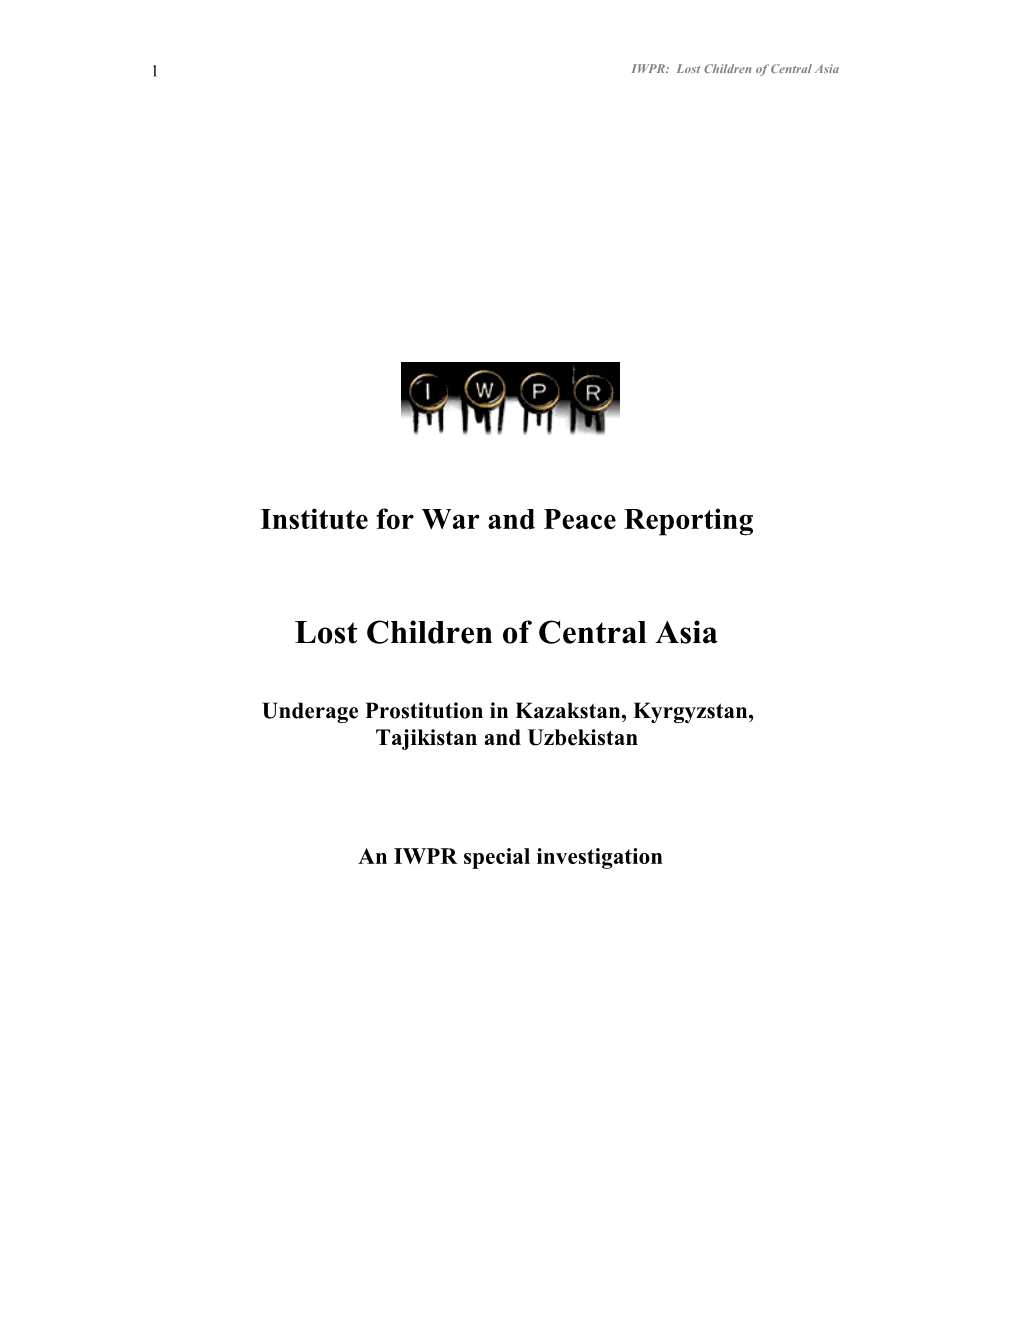 Lost Children of Central Asia (IWPR)